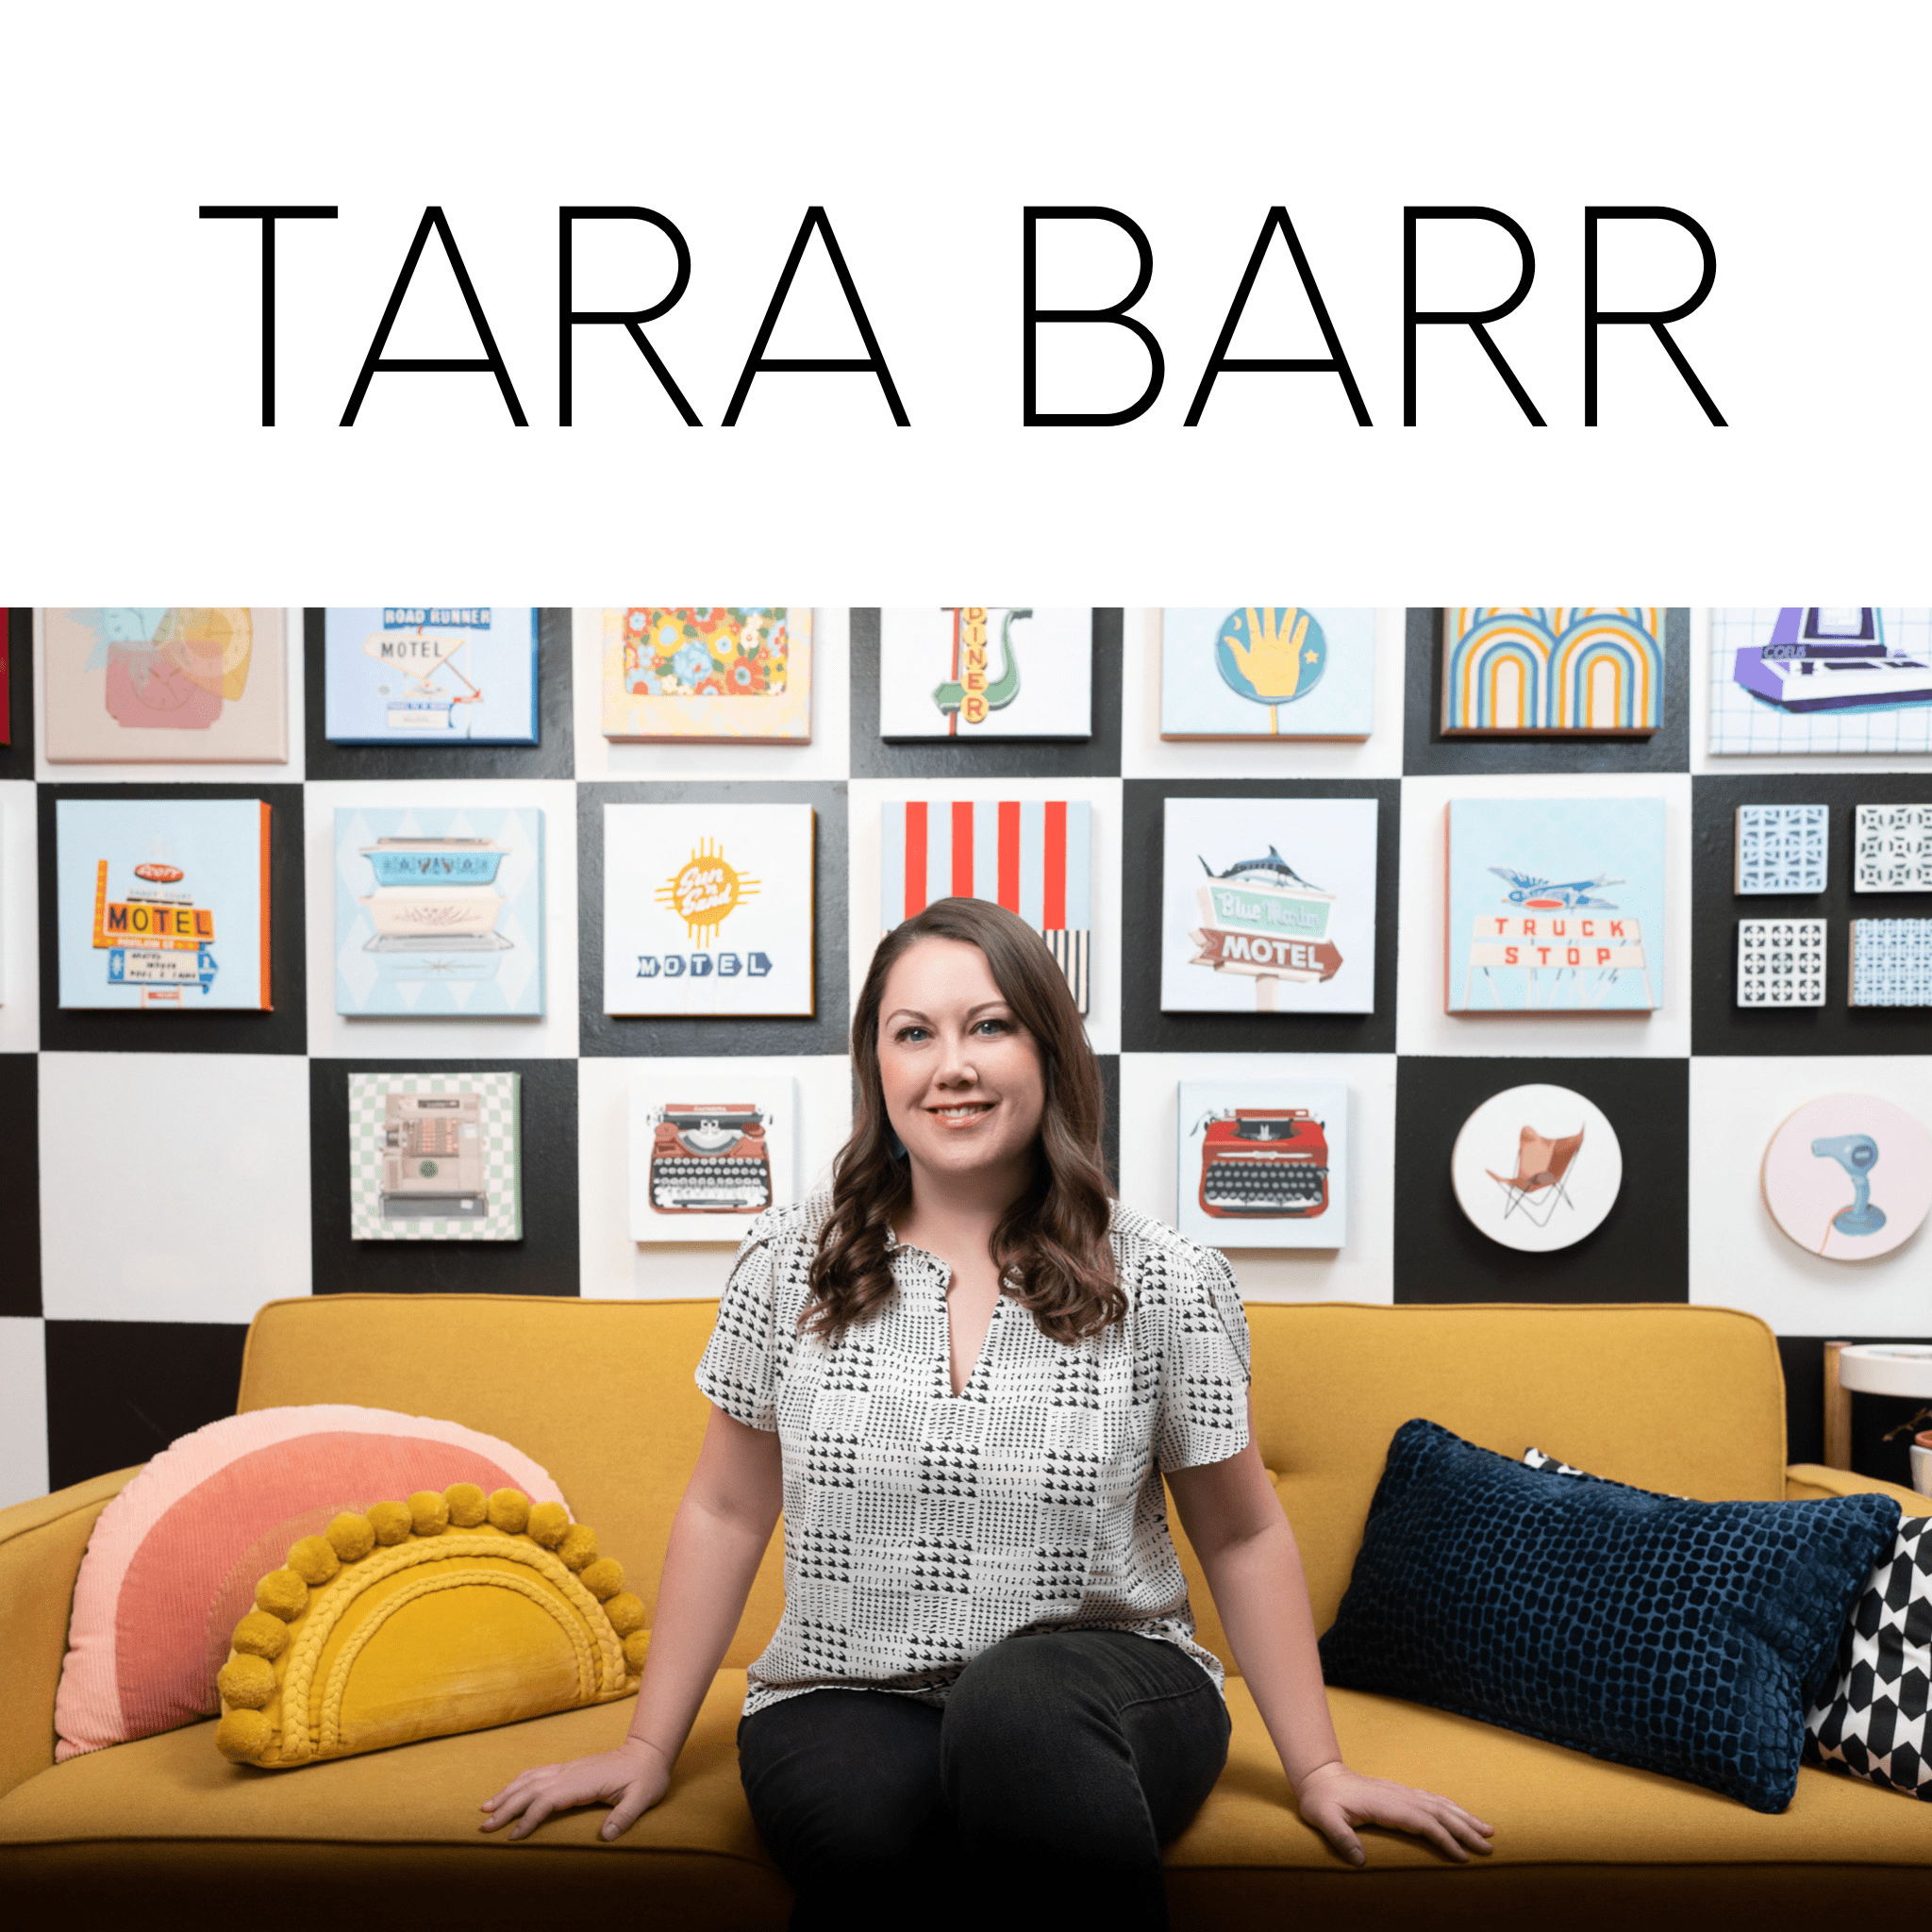 Tara Barr